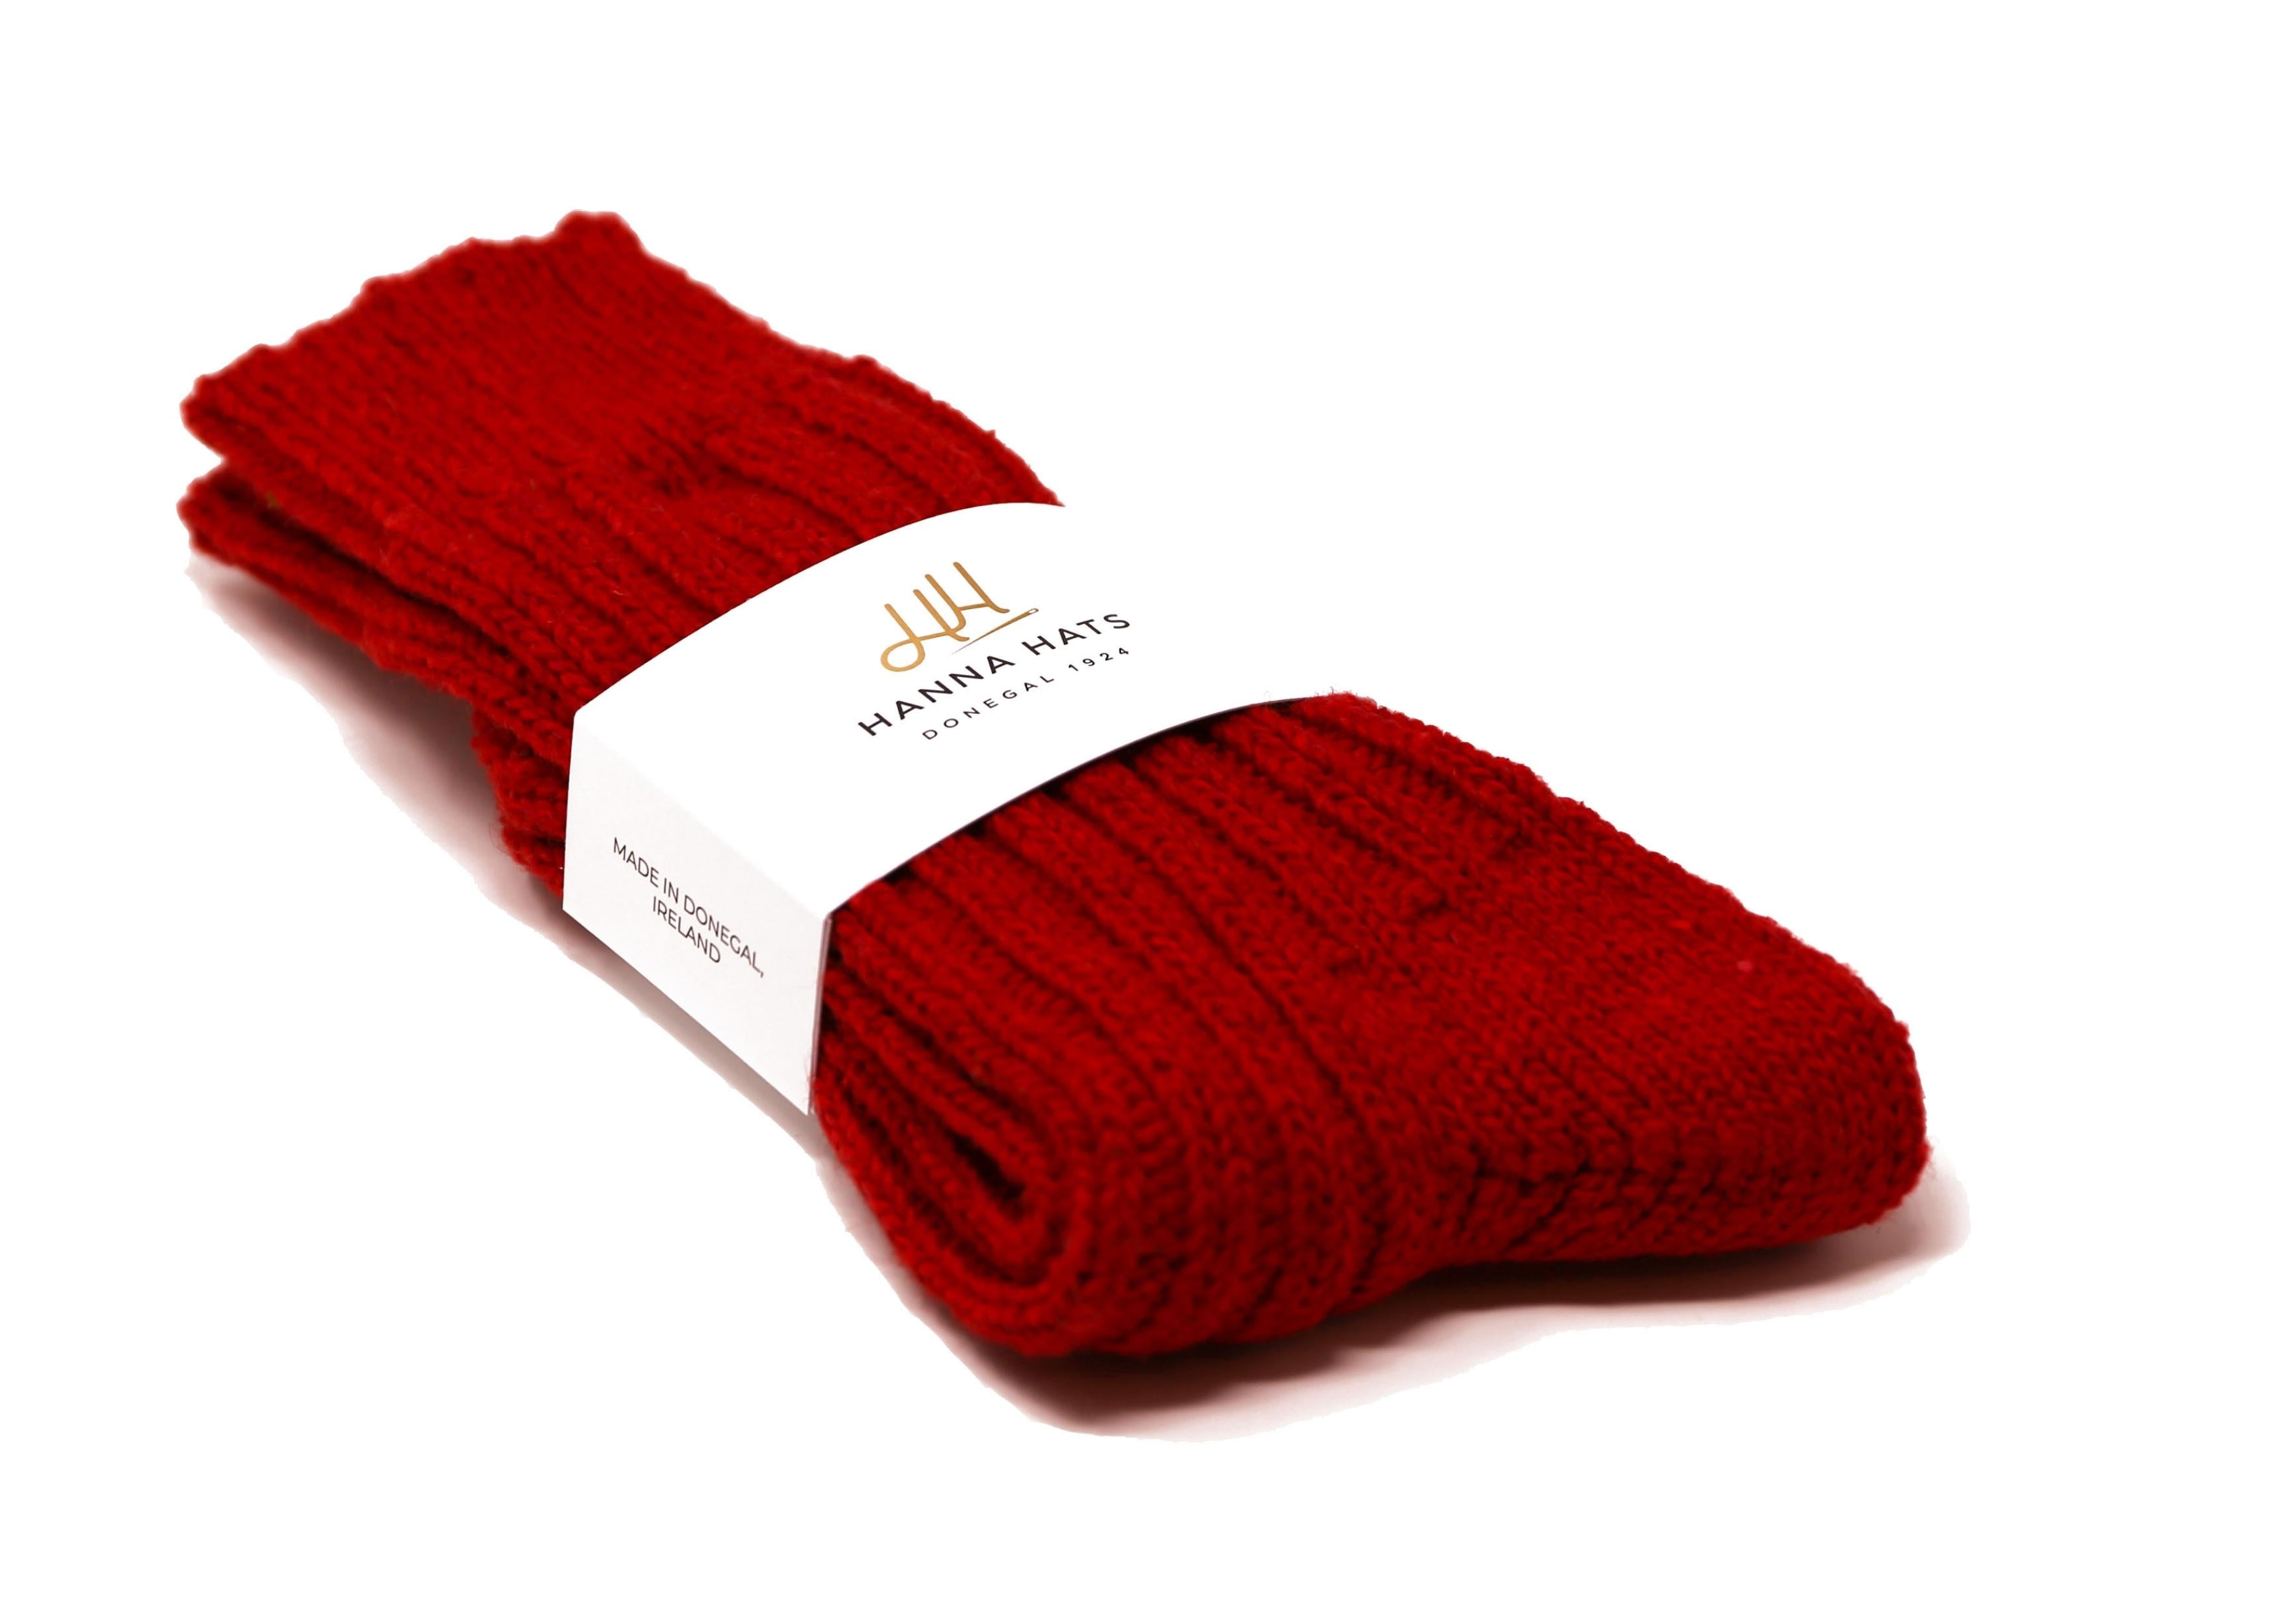 Donegal Socks Crimson Red Heavy Wool Socks Made in Ireland